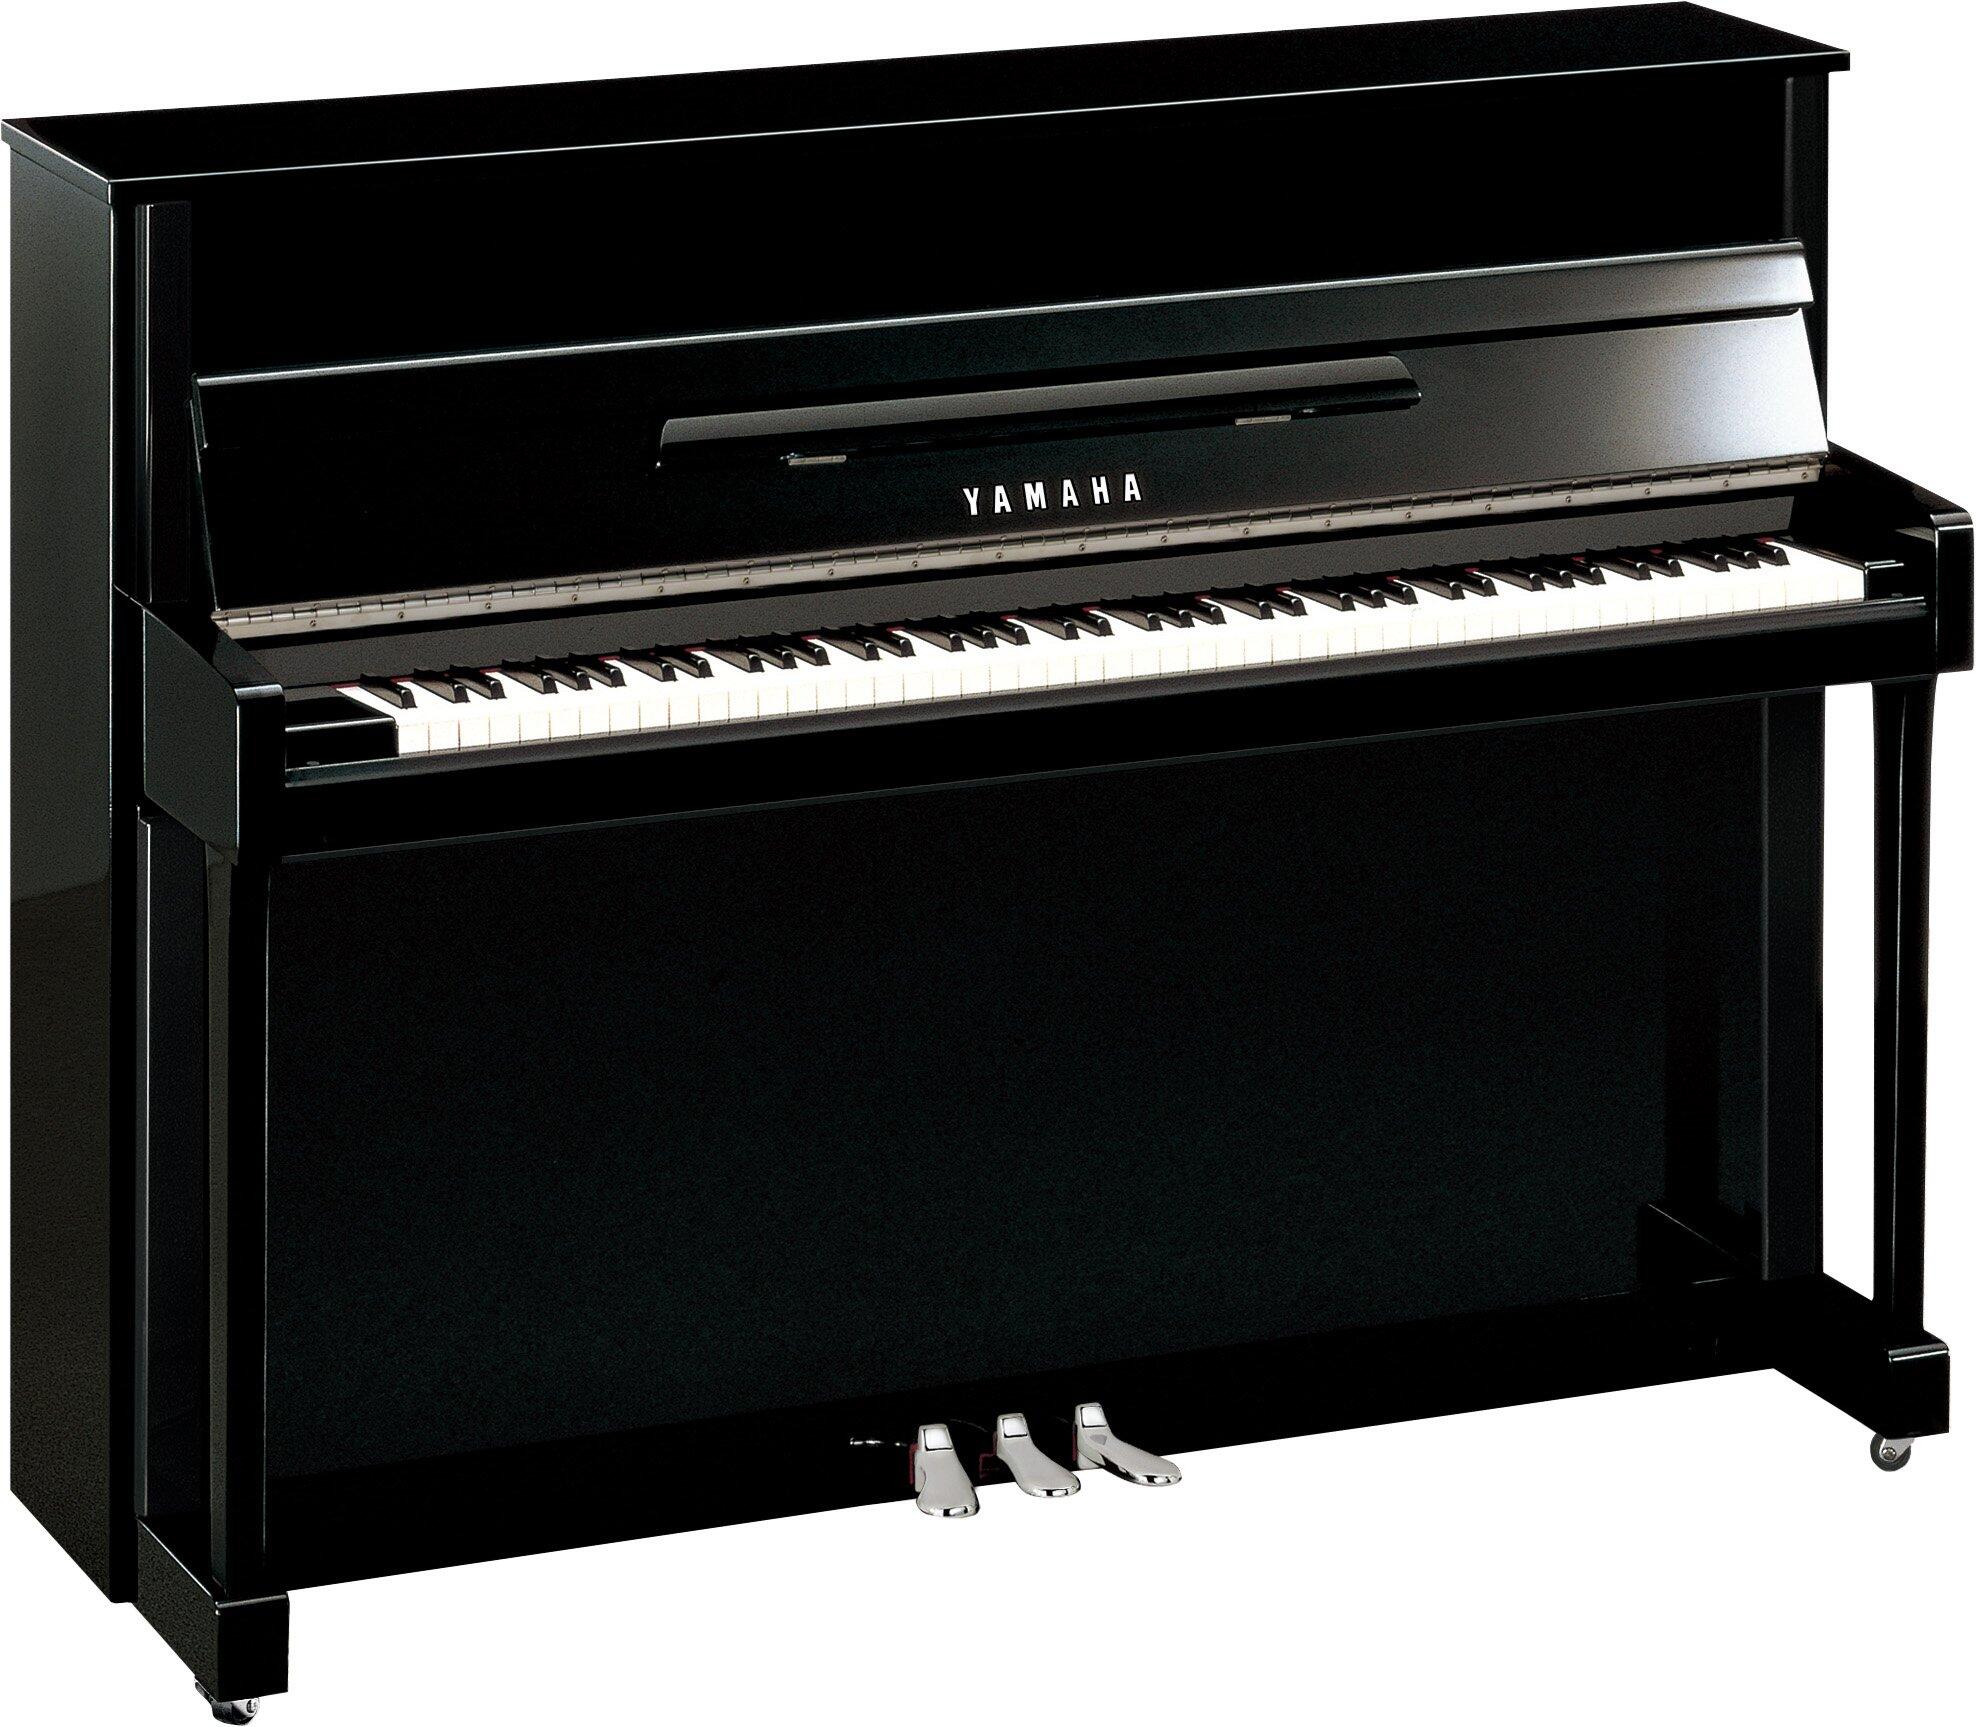 Yamaha Pianos Silent B2 SC3 PEC Silent Noir poli-brillant Chrome 113 cm : photo 1